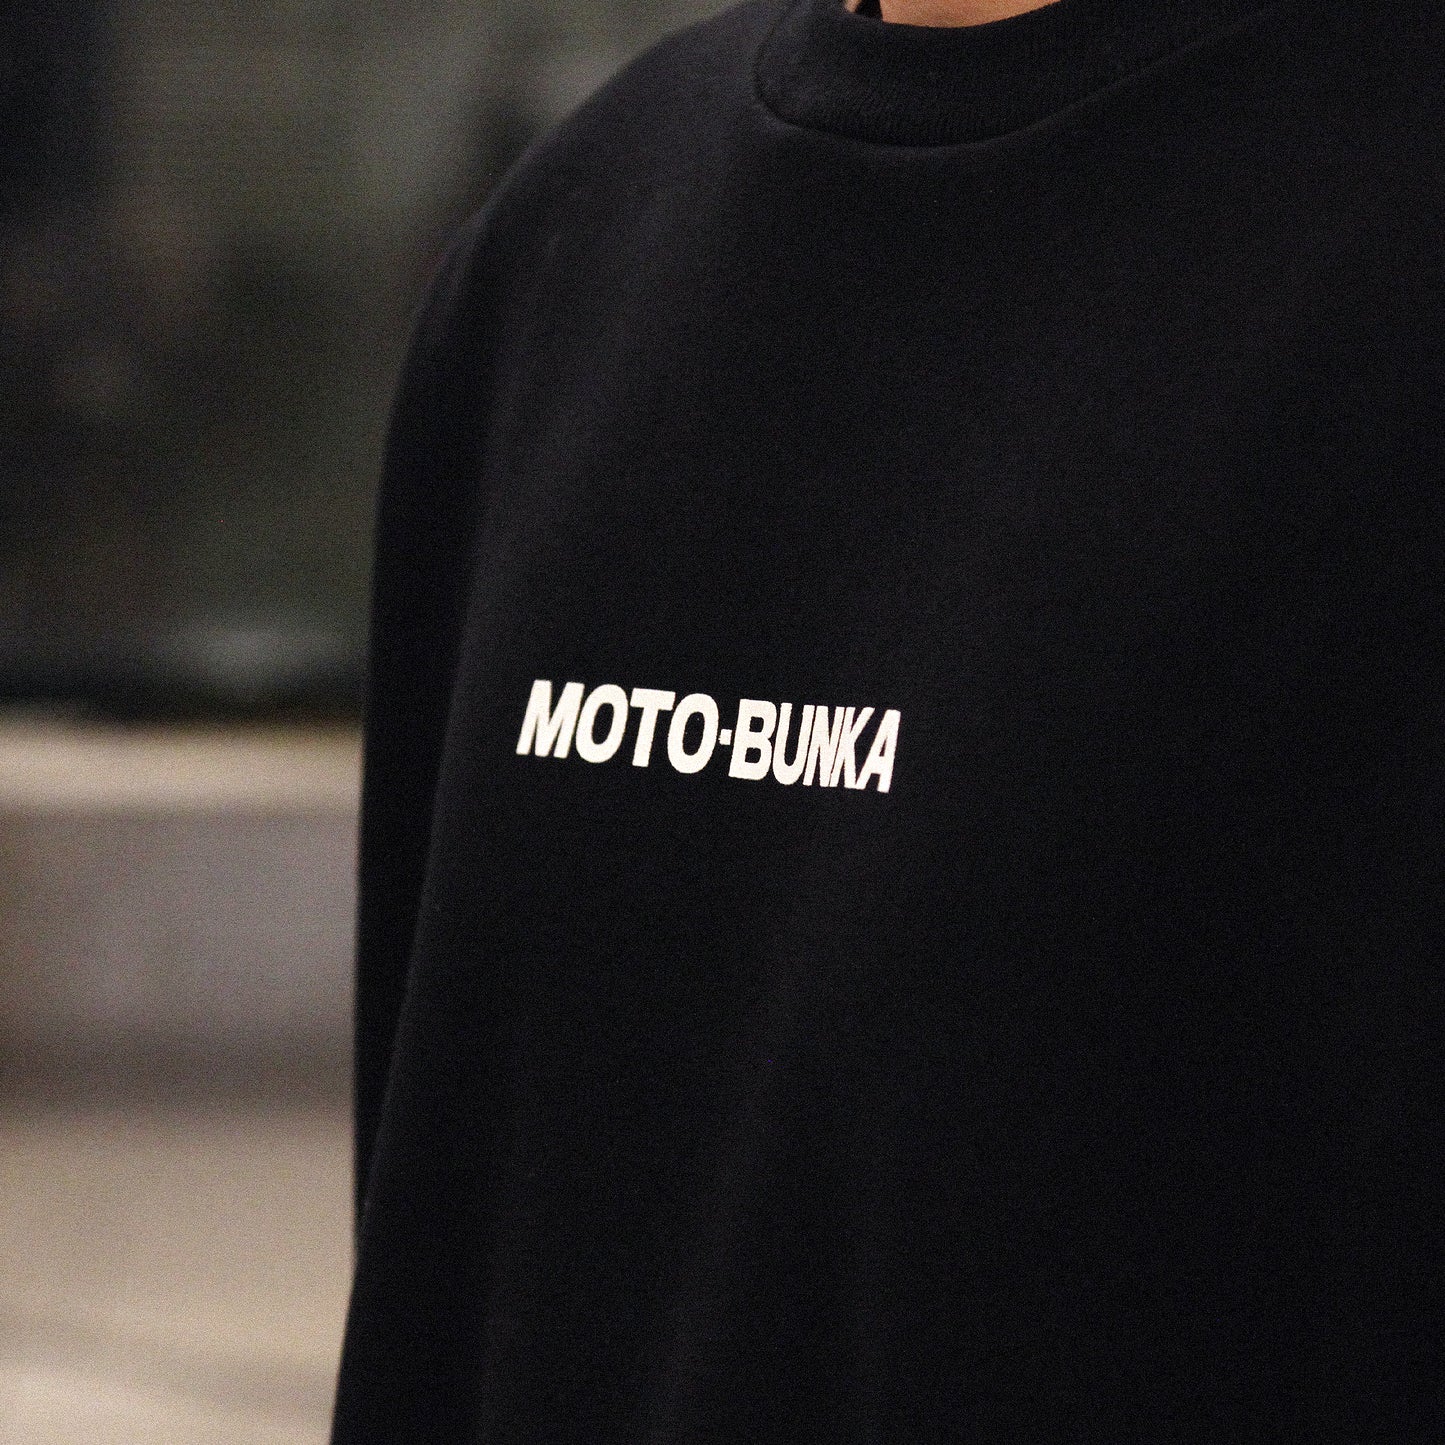 MOTO-BUNKA - JBM 23 Sweatshirt/Black-White